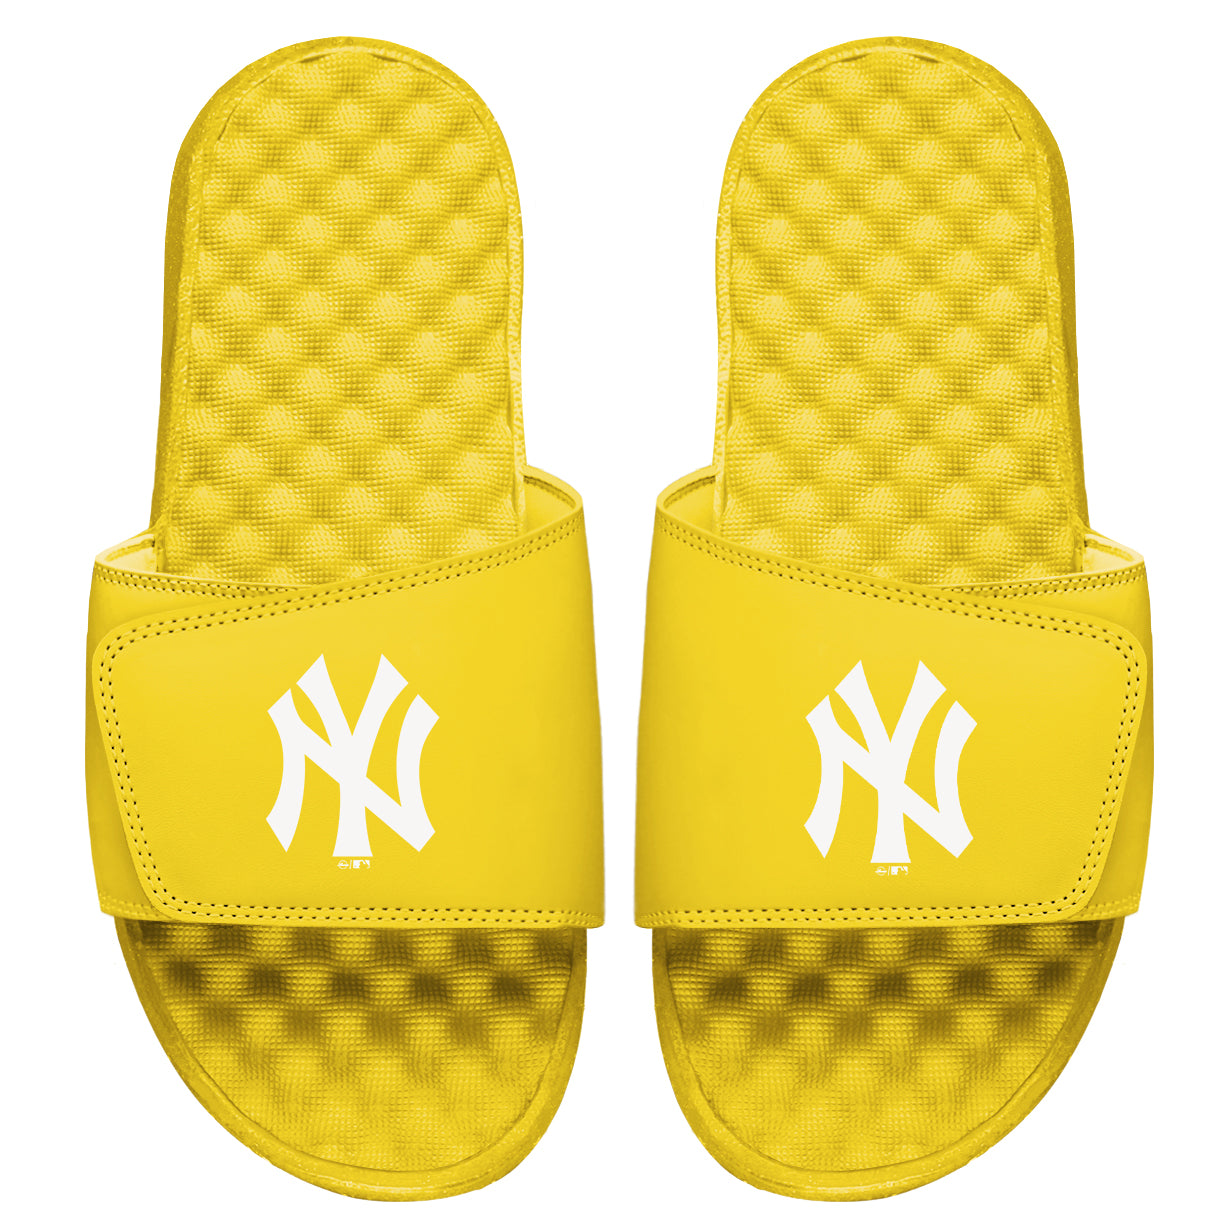 ISlides Official - New York Yankees Pride 13 / Black Slides - Sandals - Slippers